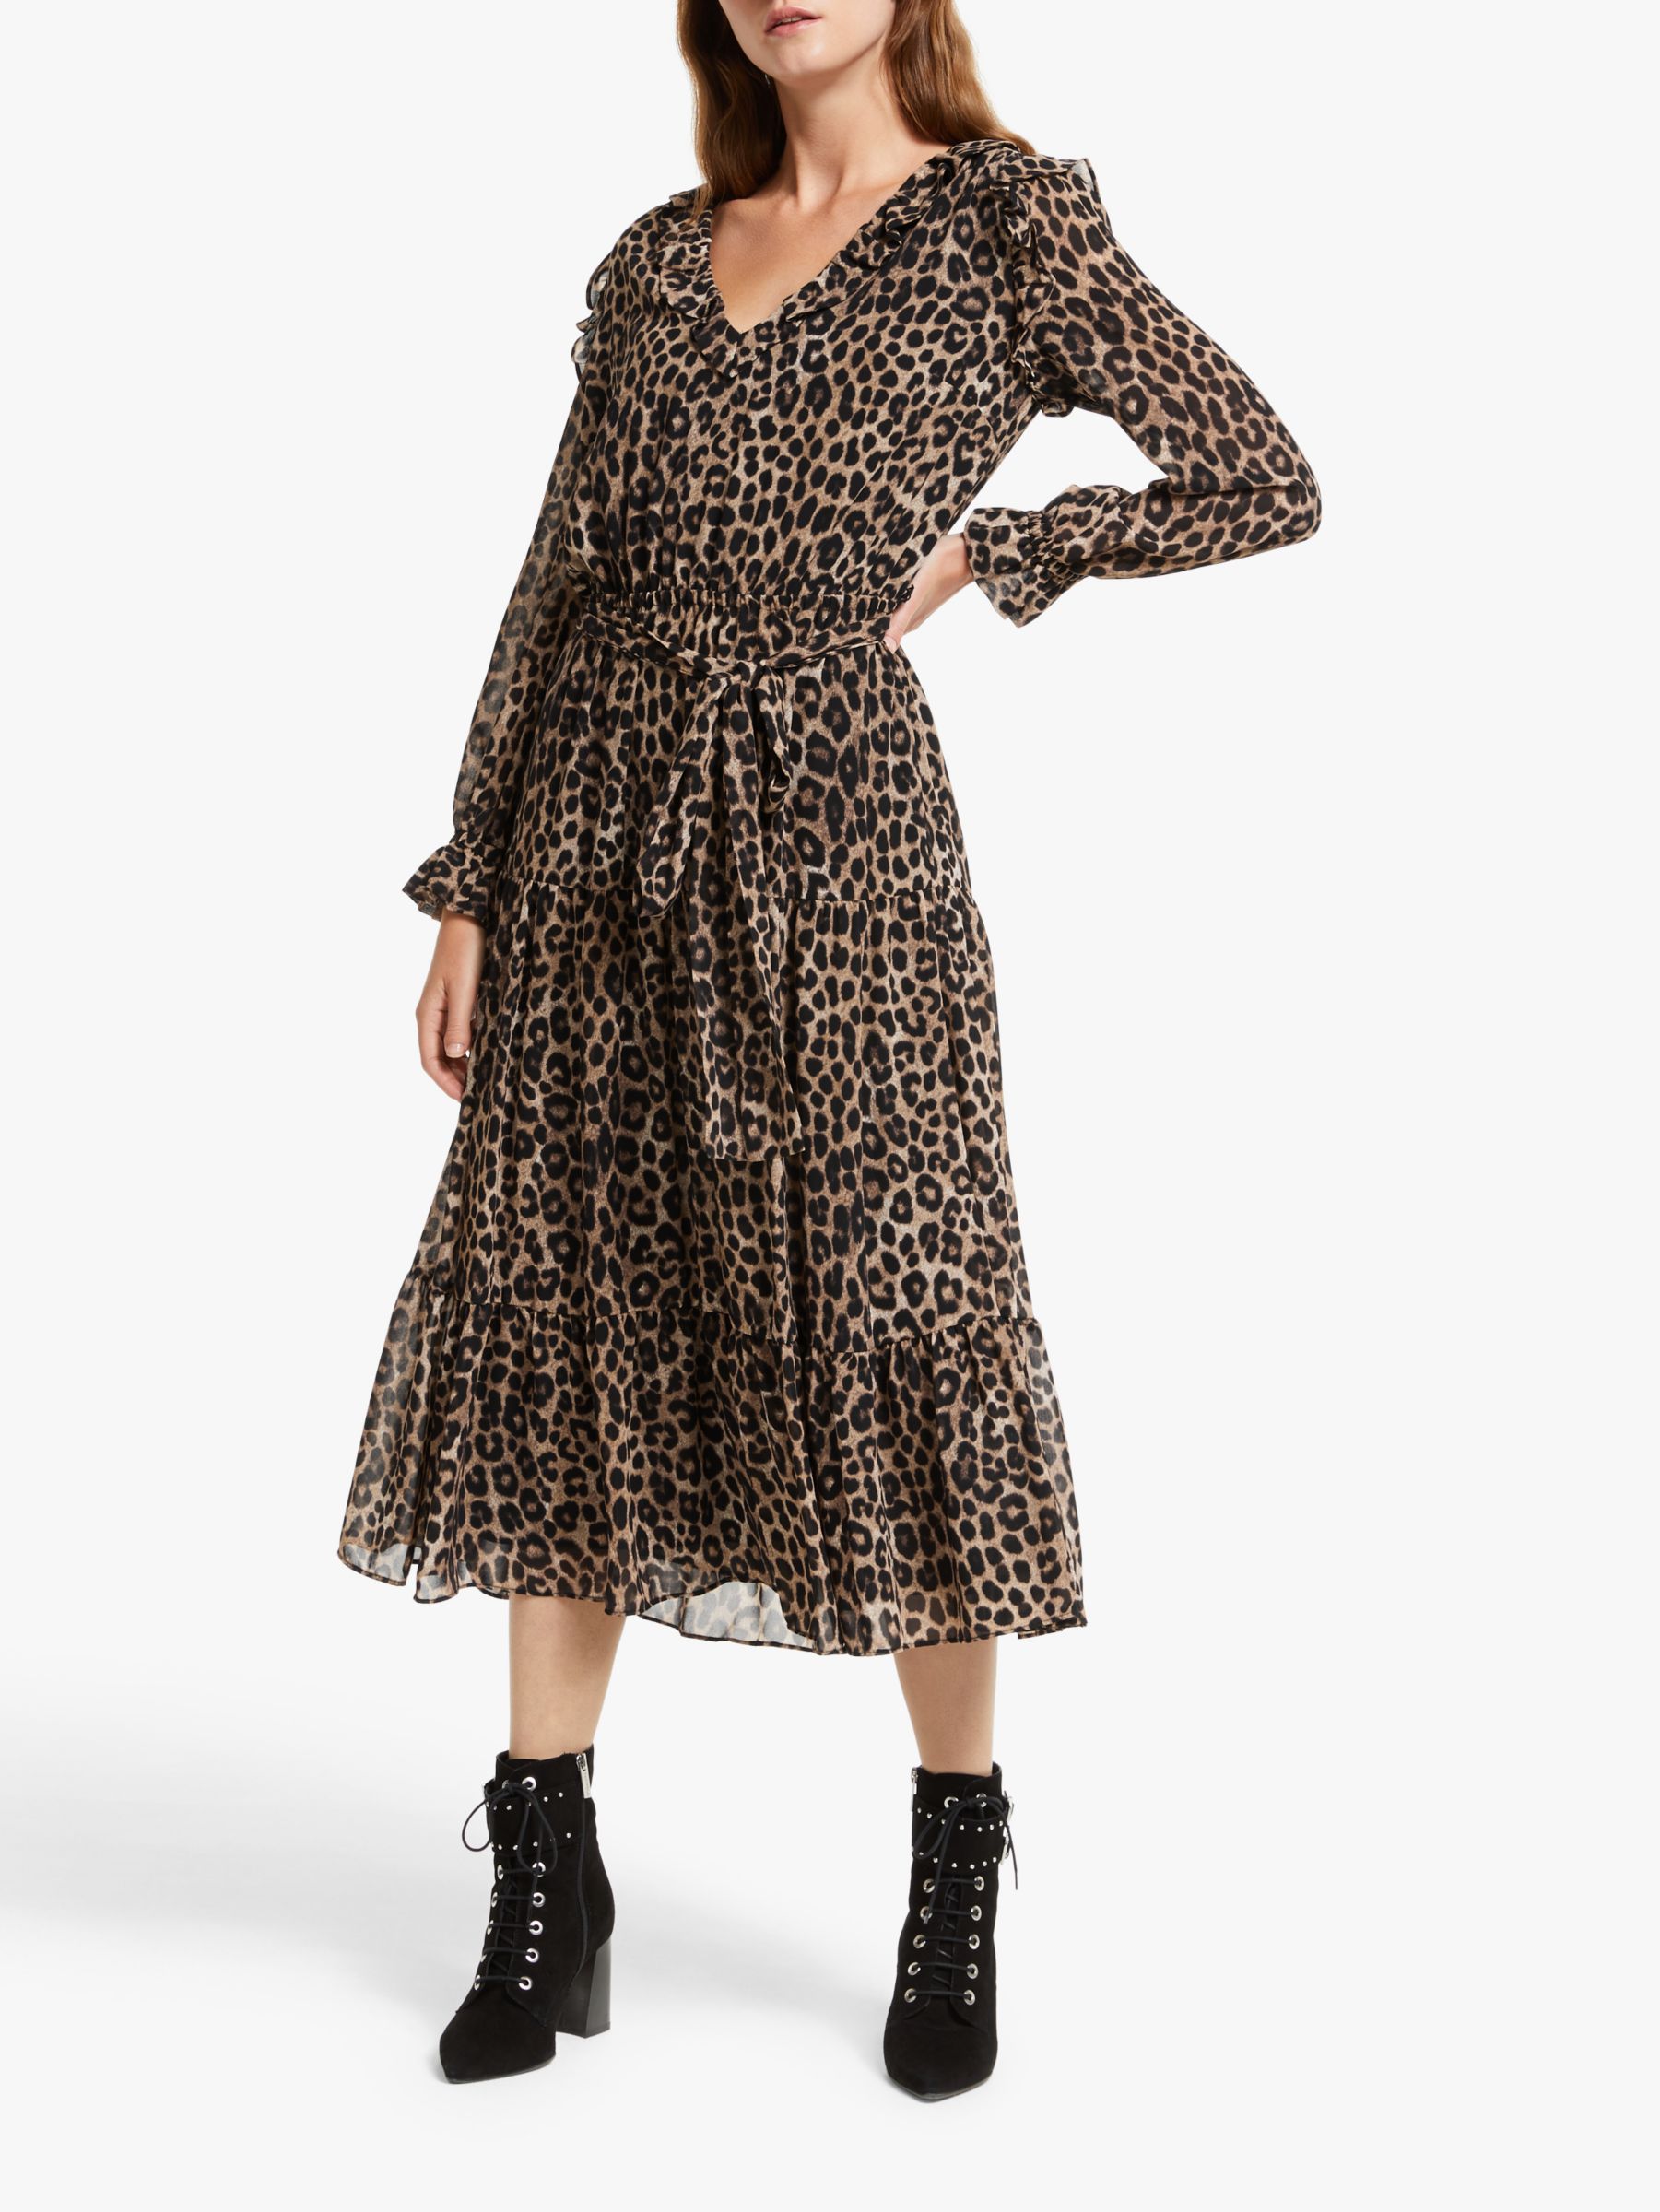 Introducir 45+ imagen michael kors cheetah print dress